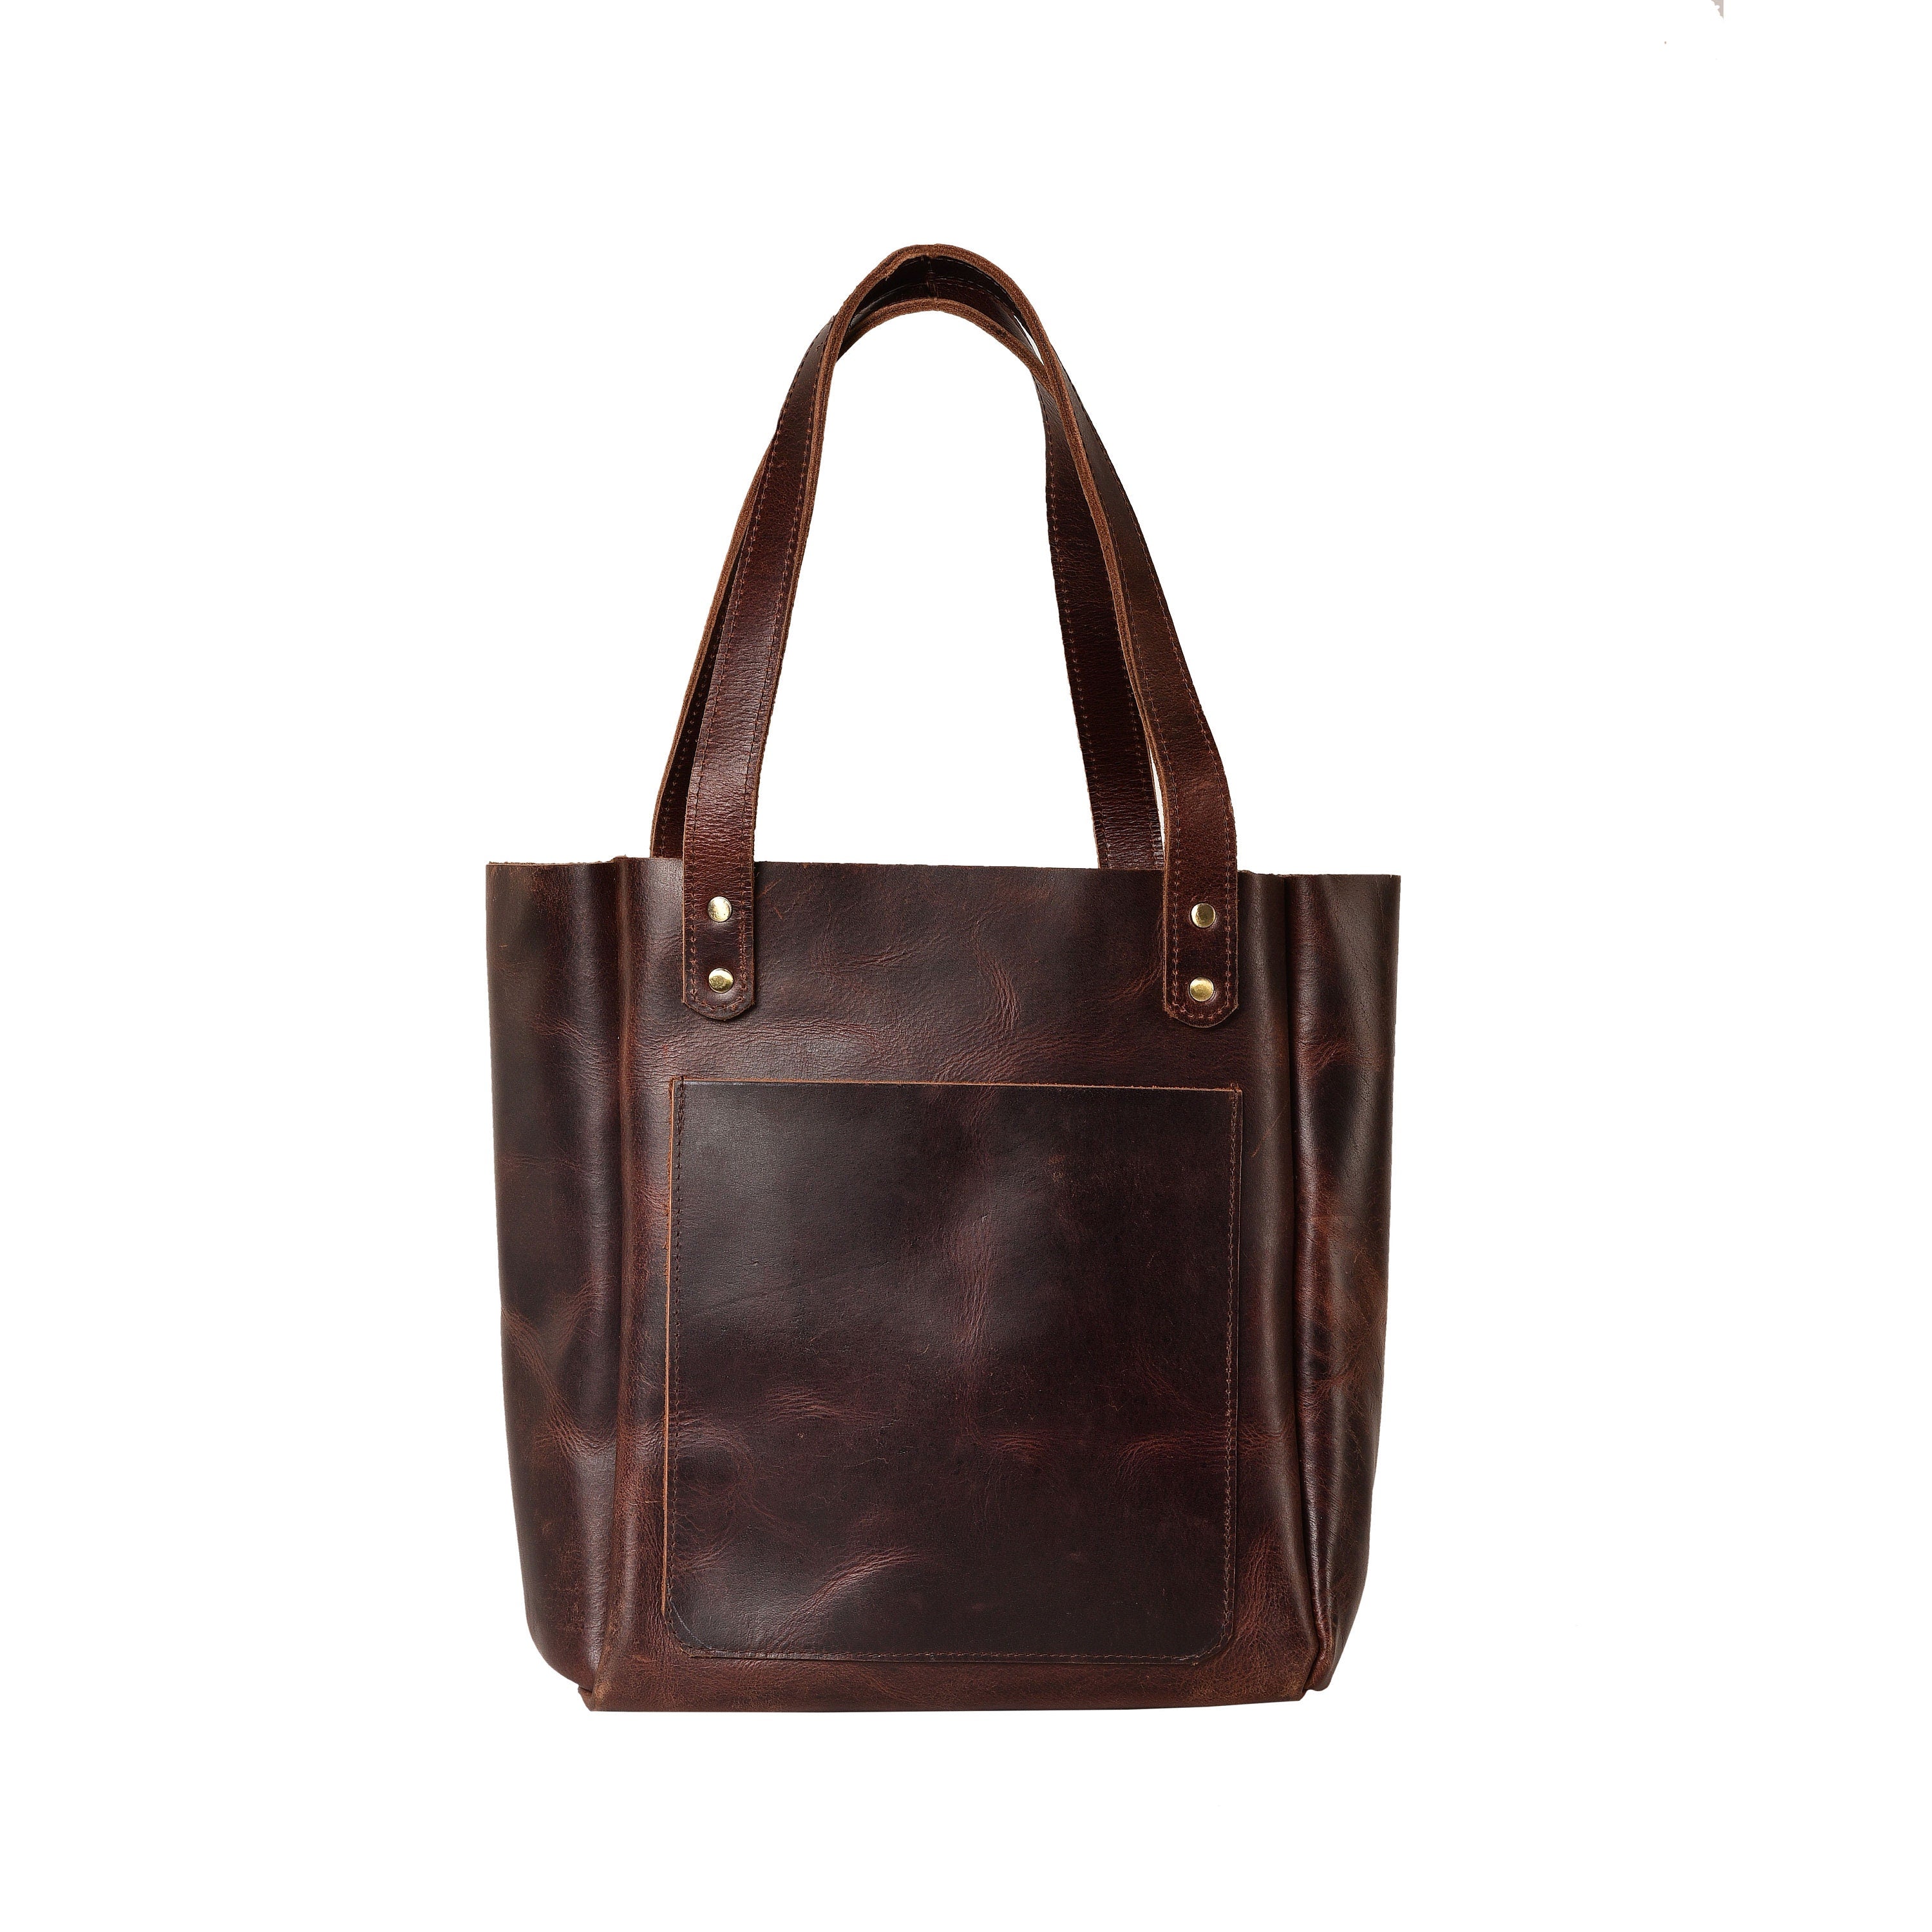 Etui tan - Leather purse - Project Dyad